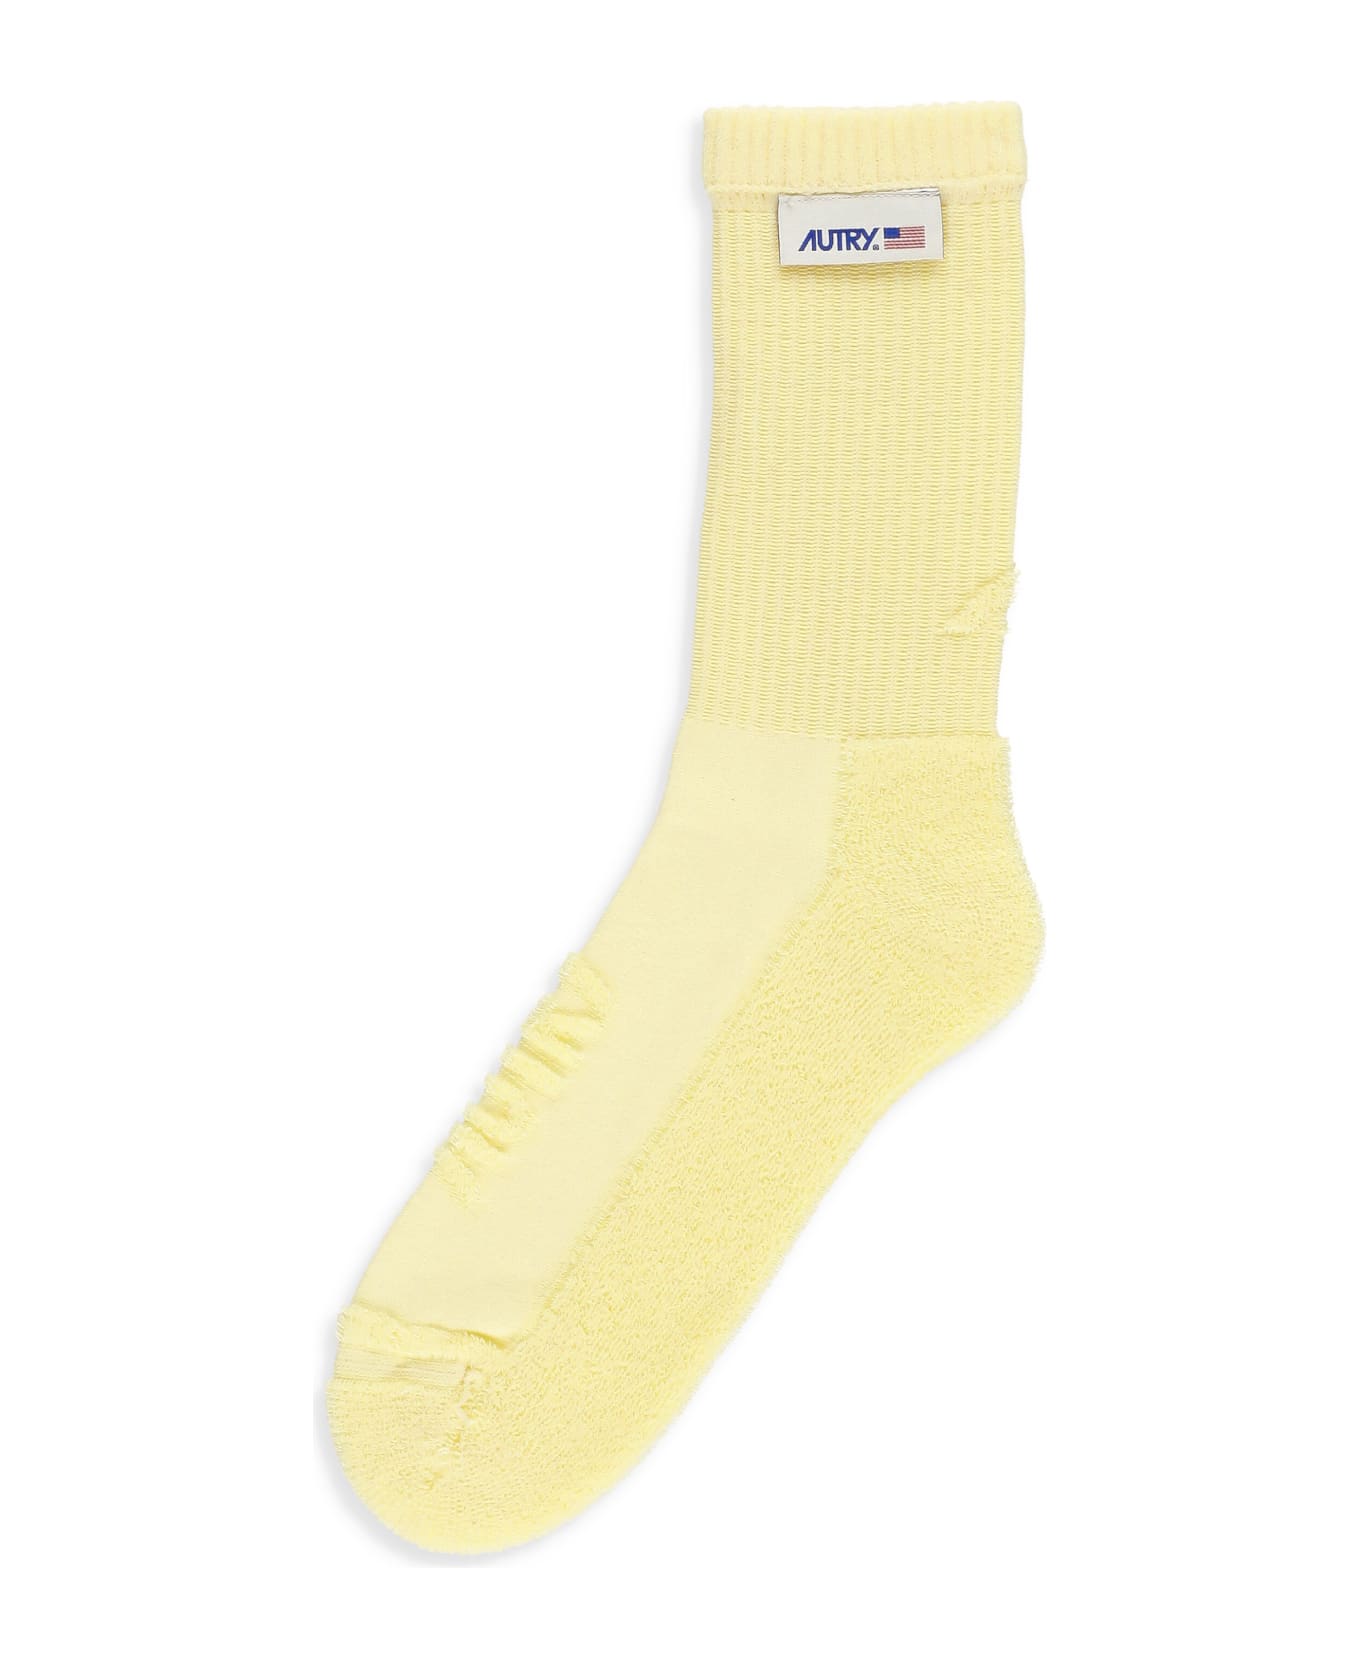 Autry Cotton Socks - Yellow 靴下